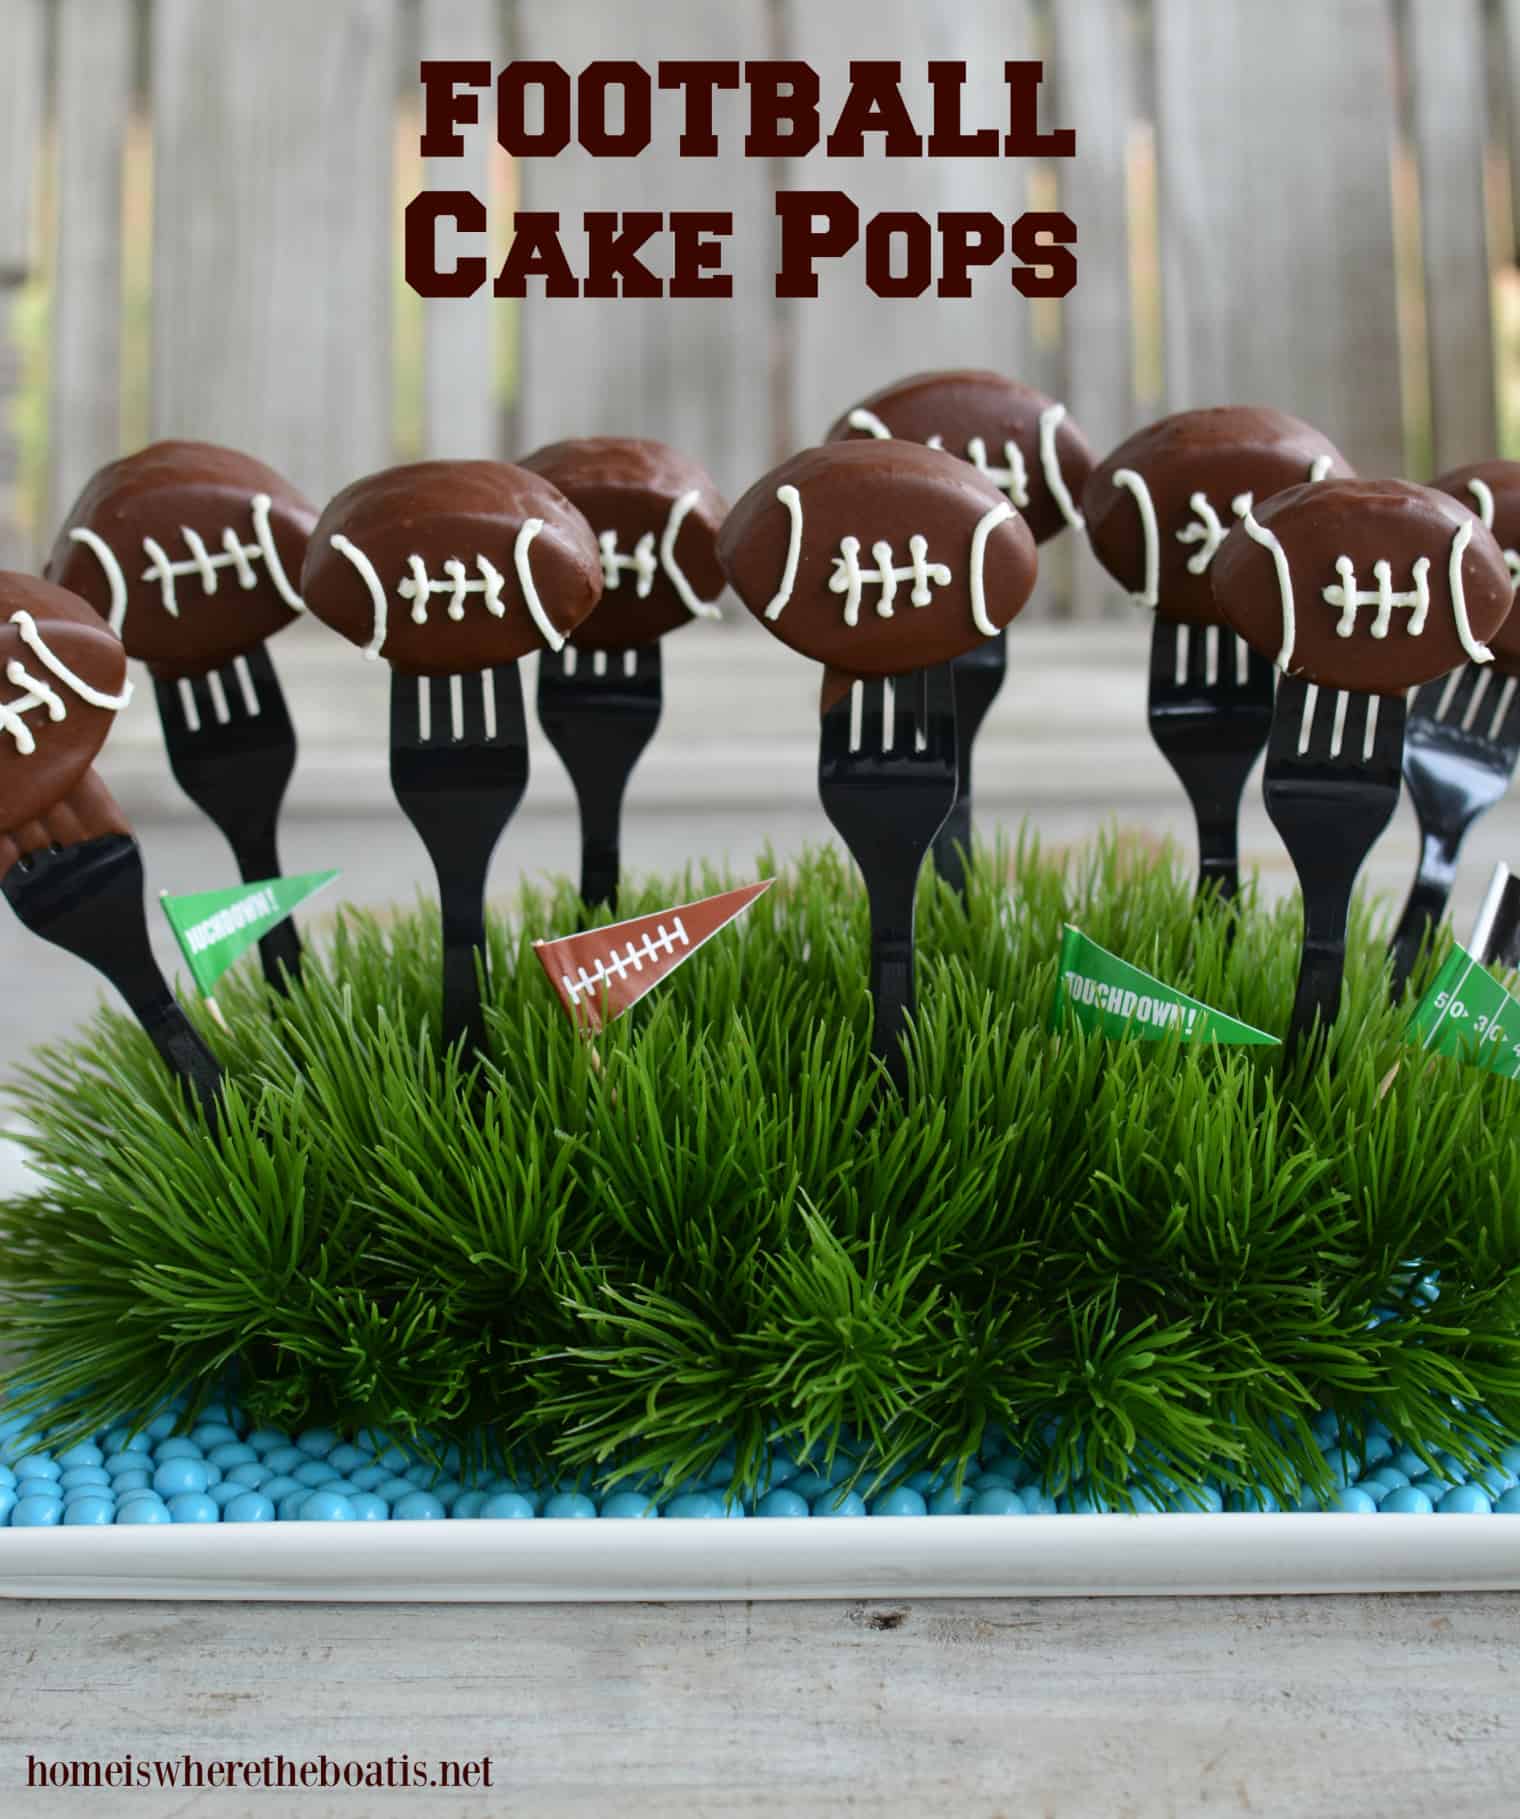 Football cake pops on forks